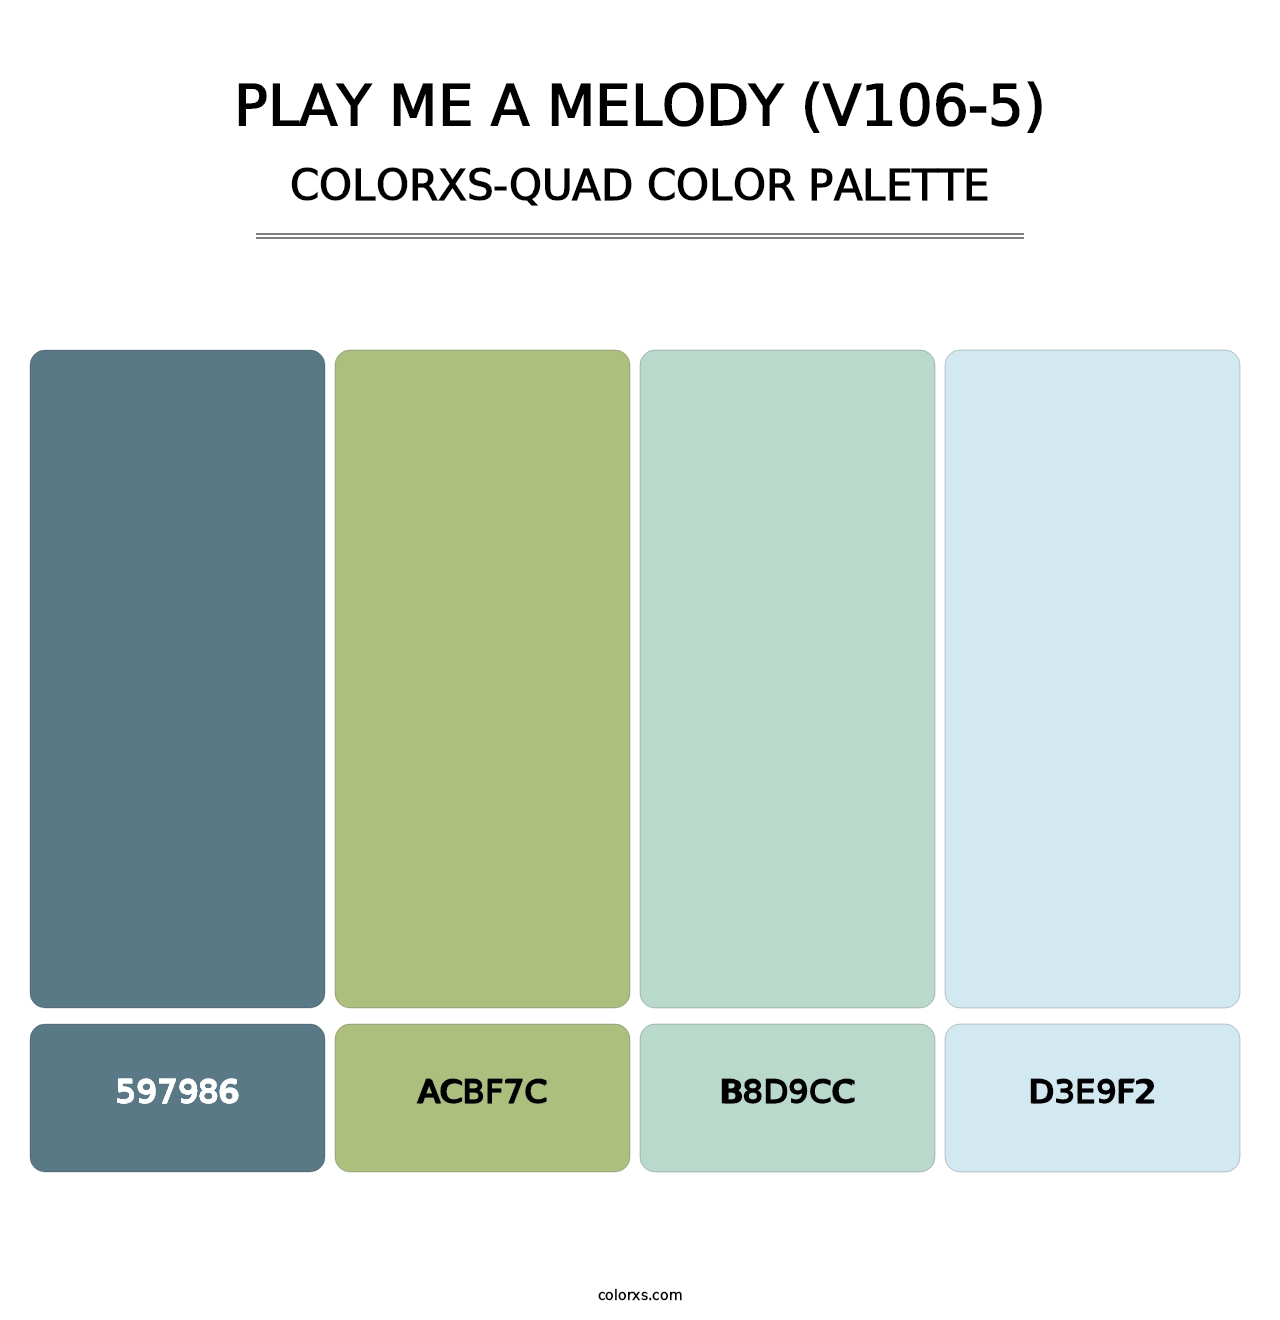 Play Me a Melody (V106-5) - Colorxs Quad Palette